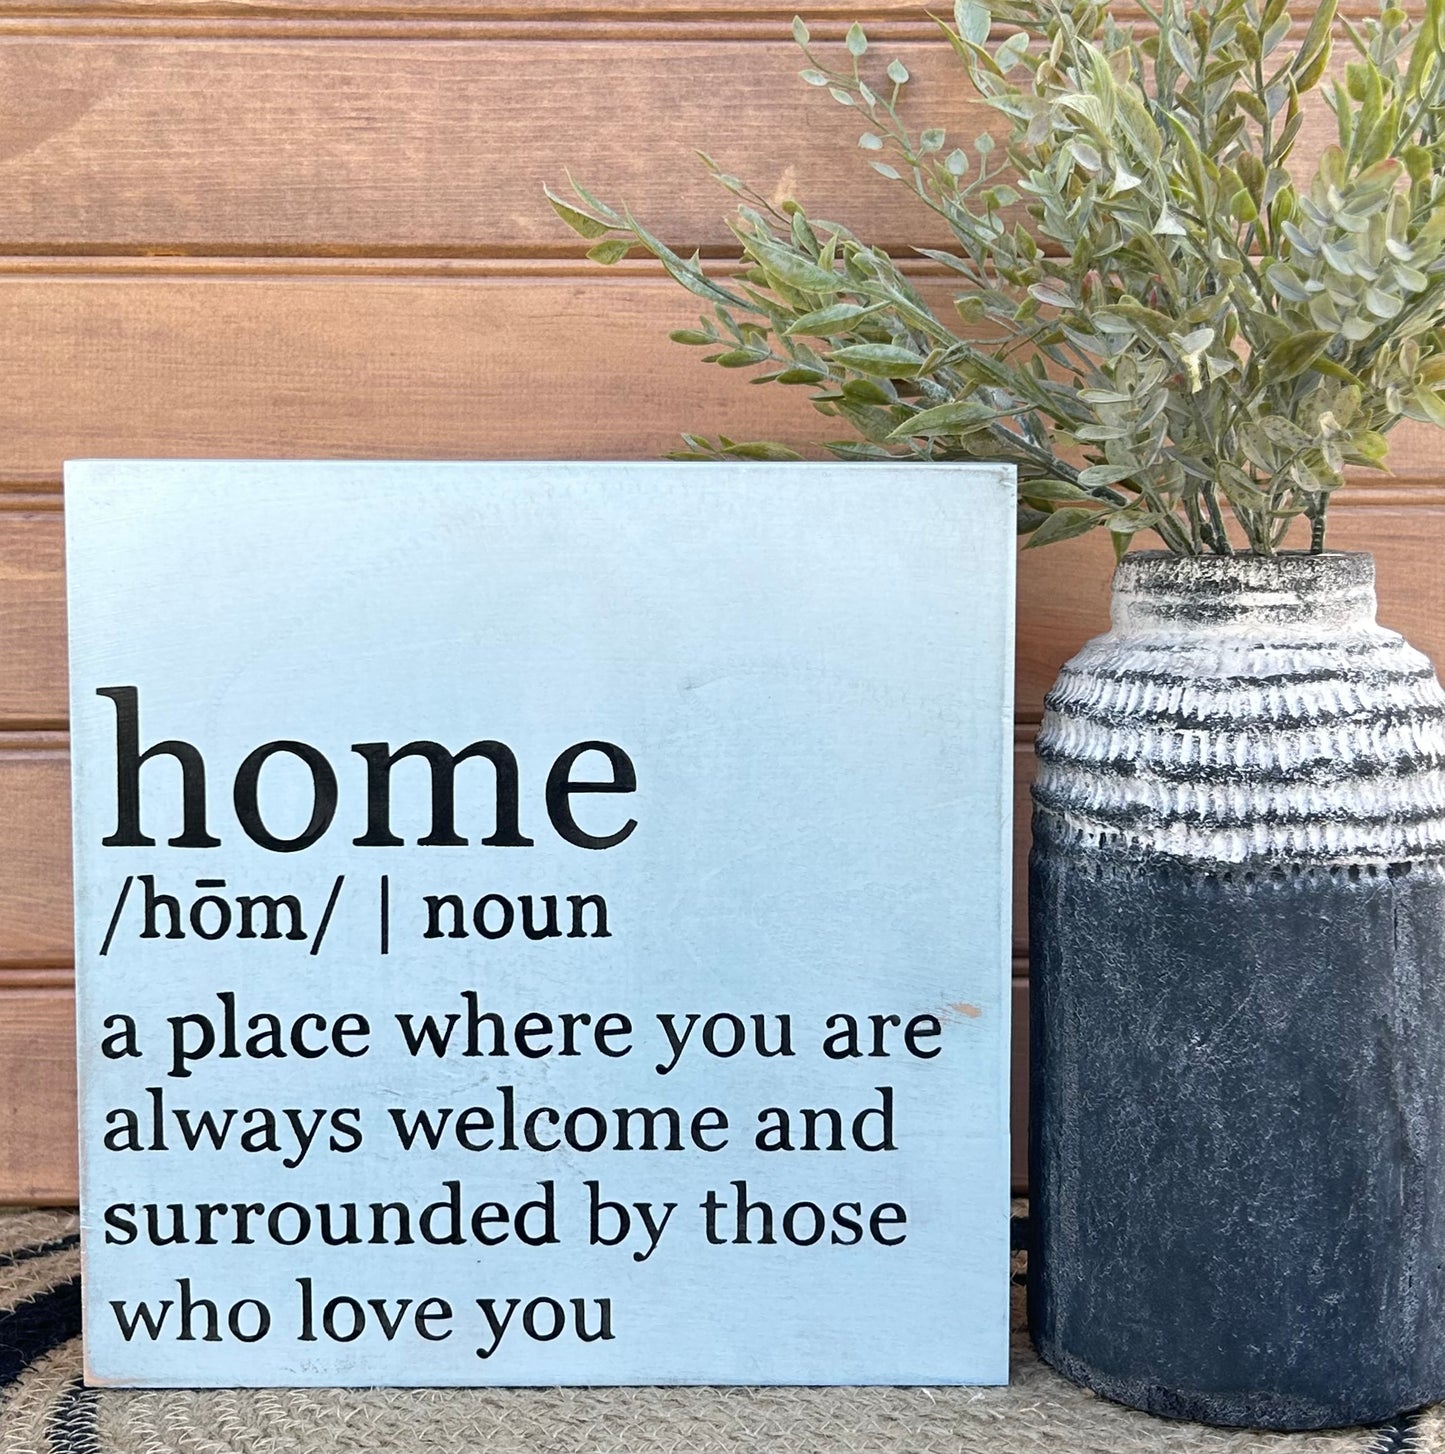 "Home" inspirational sign